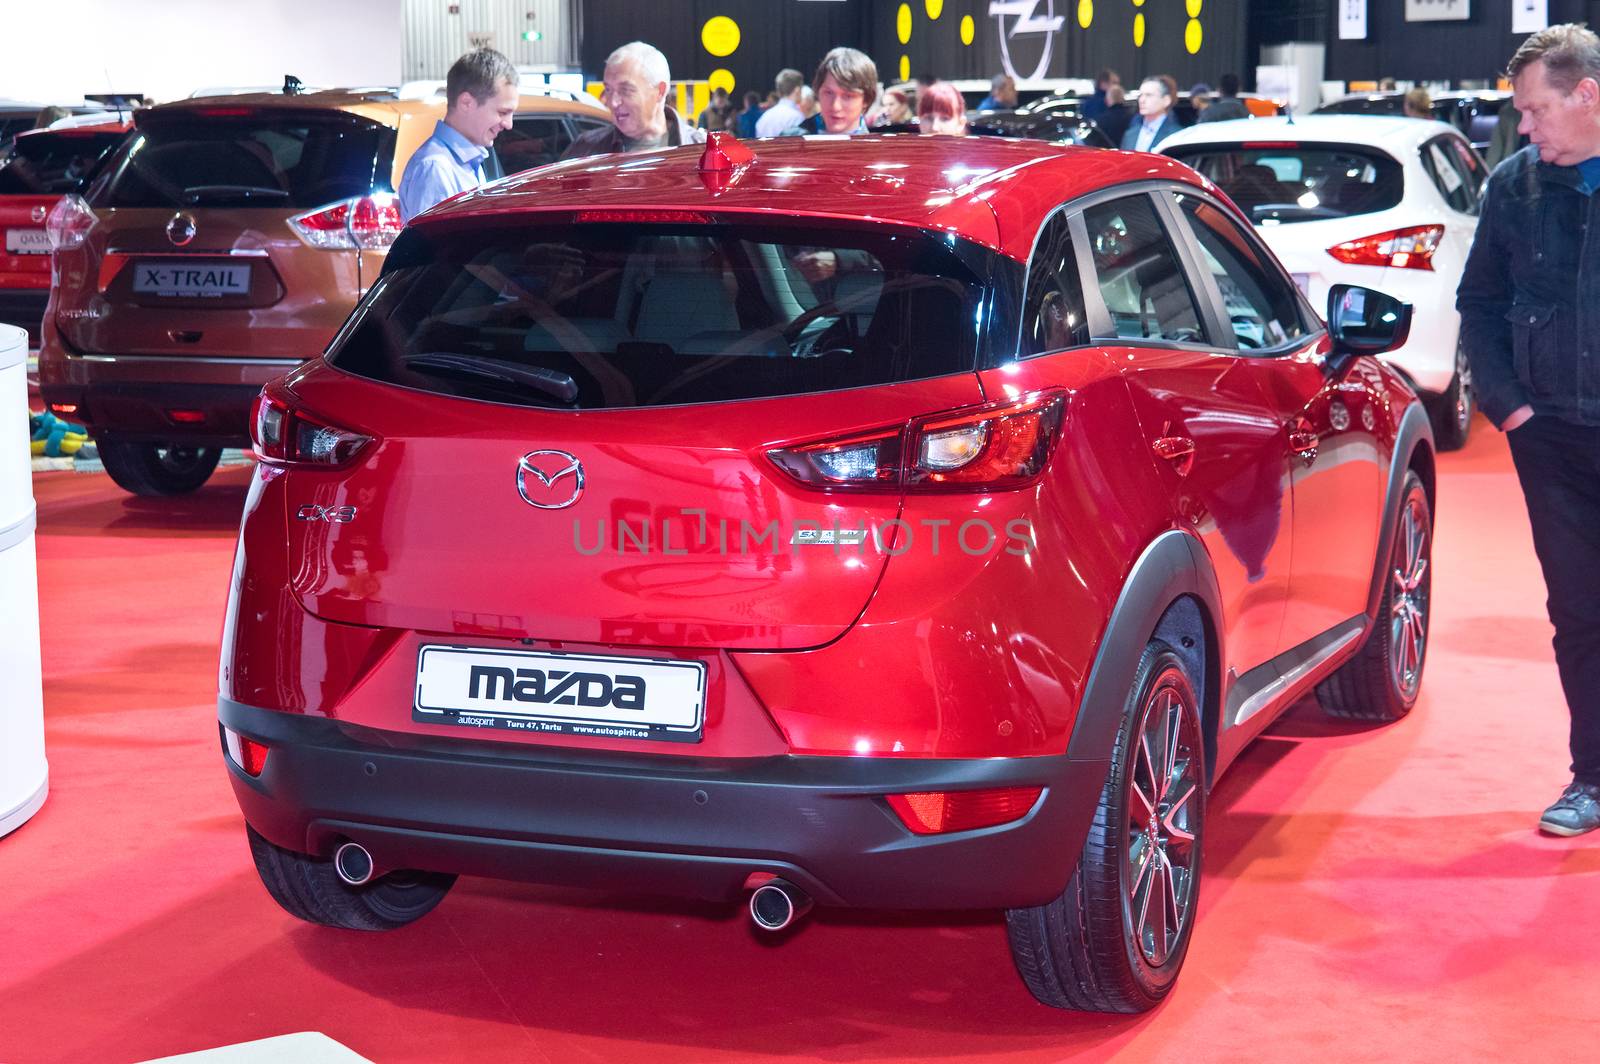 Tartu - September 26: Mazda CX-3 at the Tartu Motoshow on September 26, 2015 in Tartu, Estonia